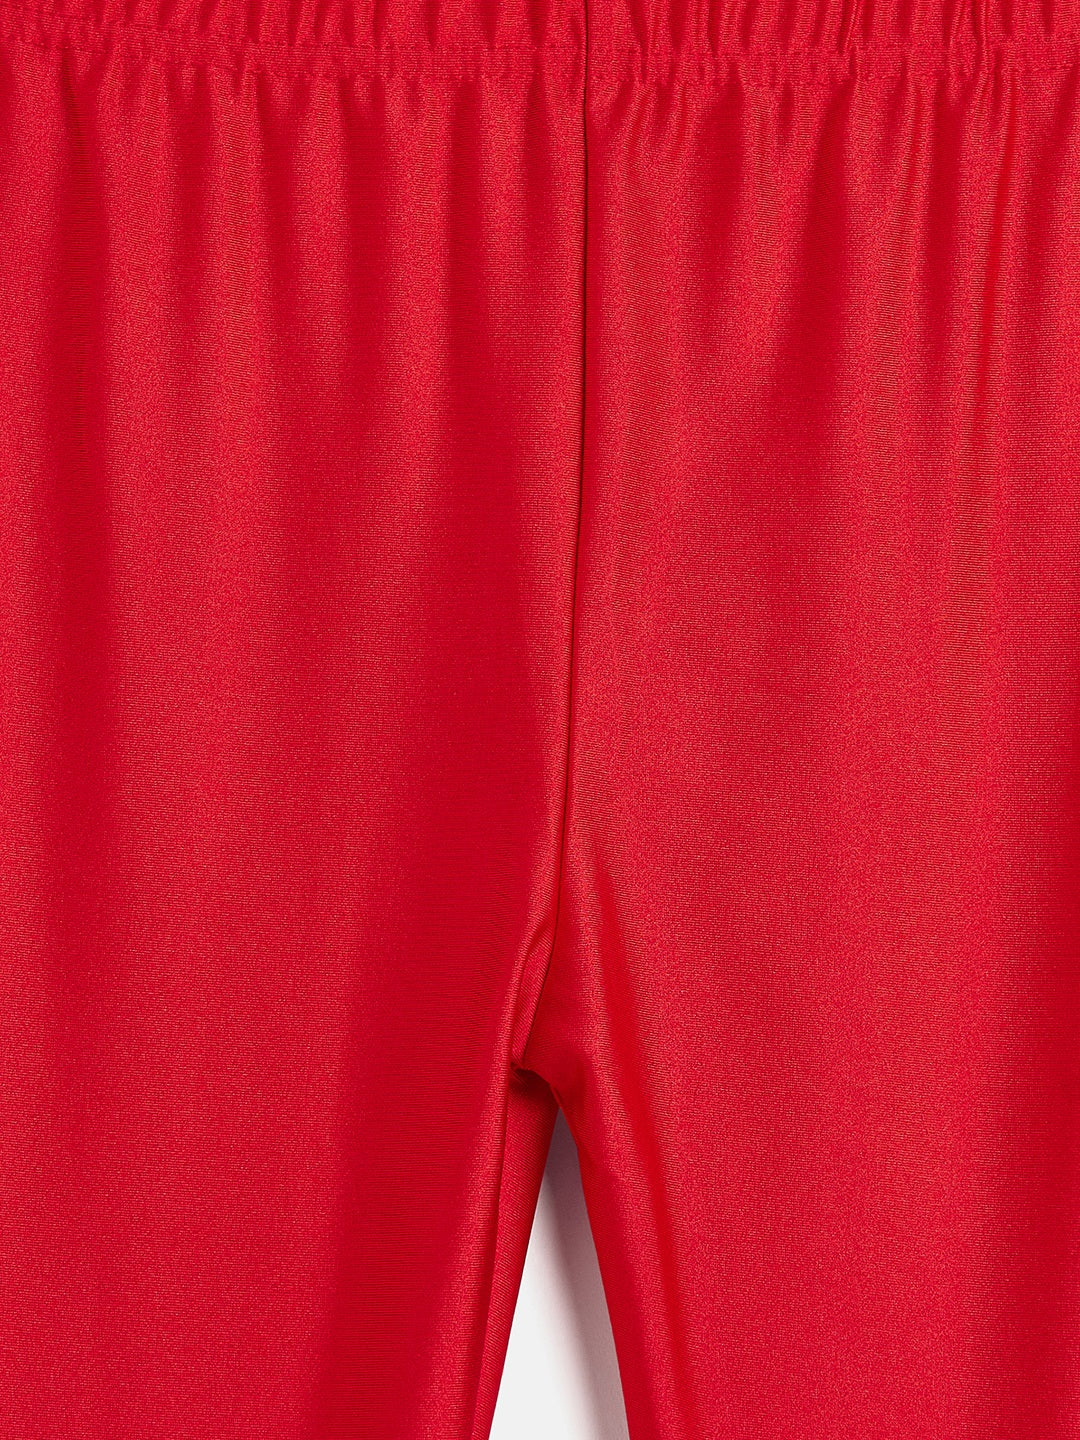 metallic red leggings – The Pajama Factory